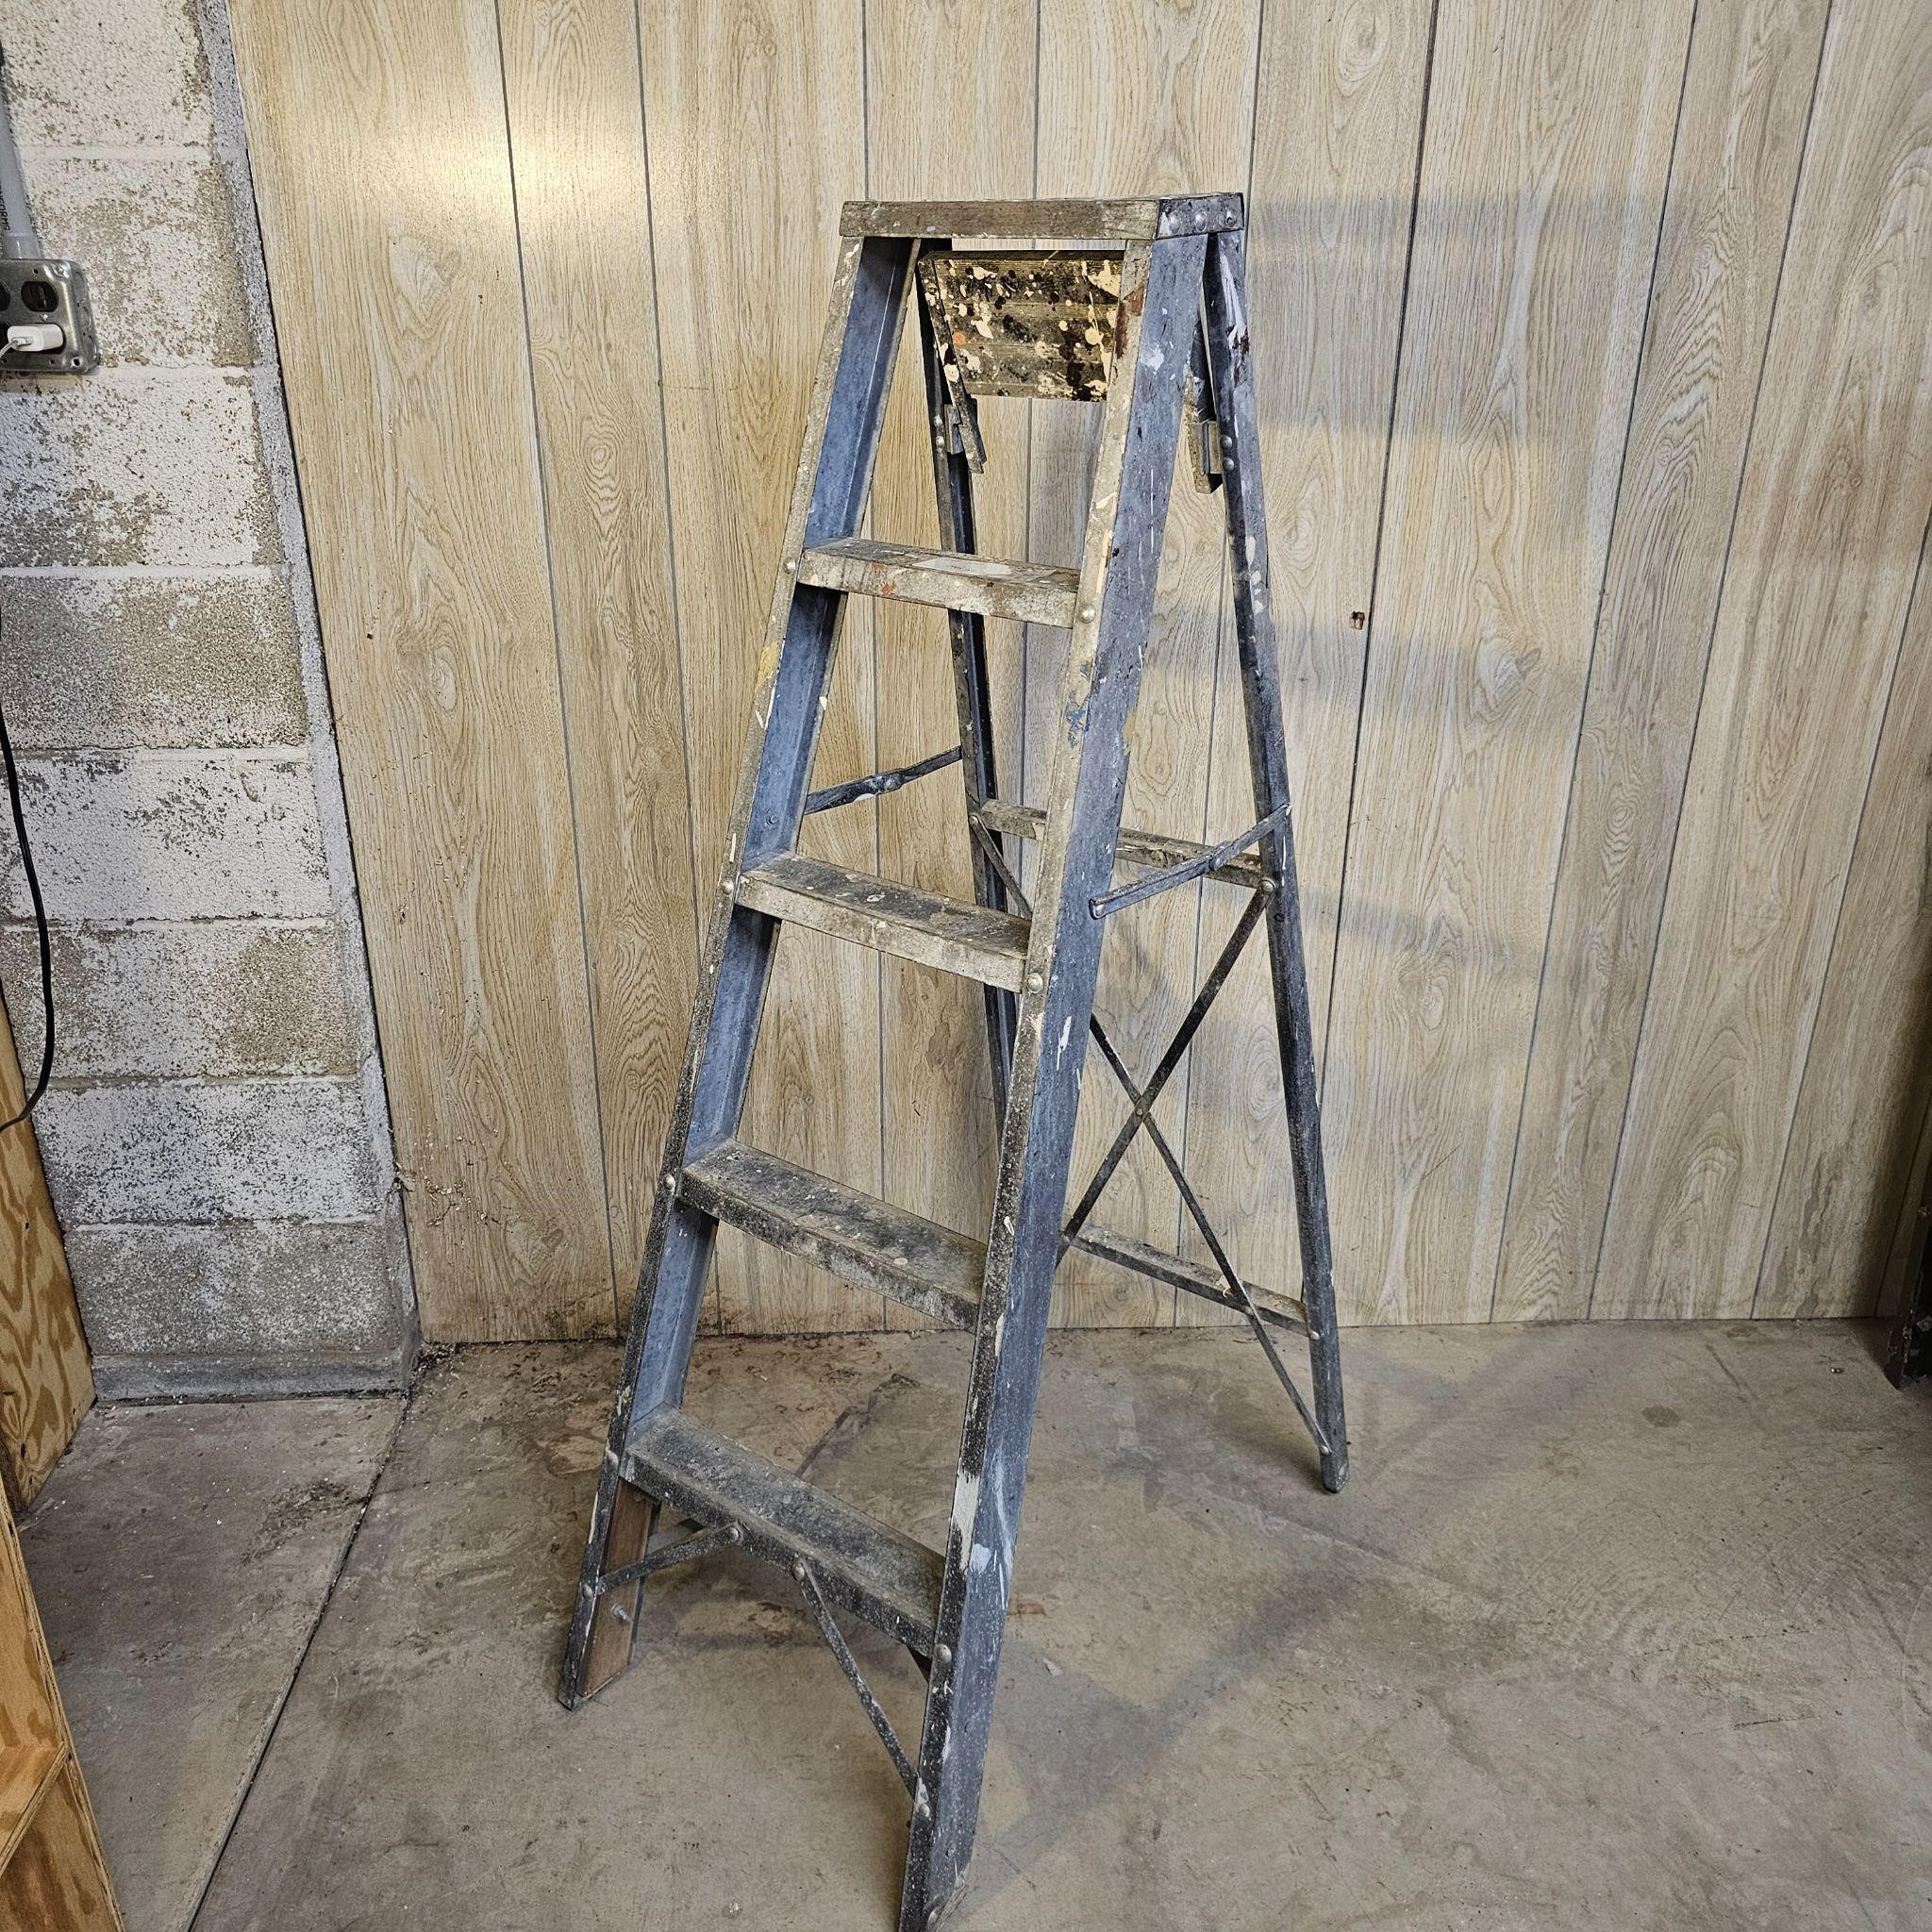 3 Step Ladders